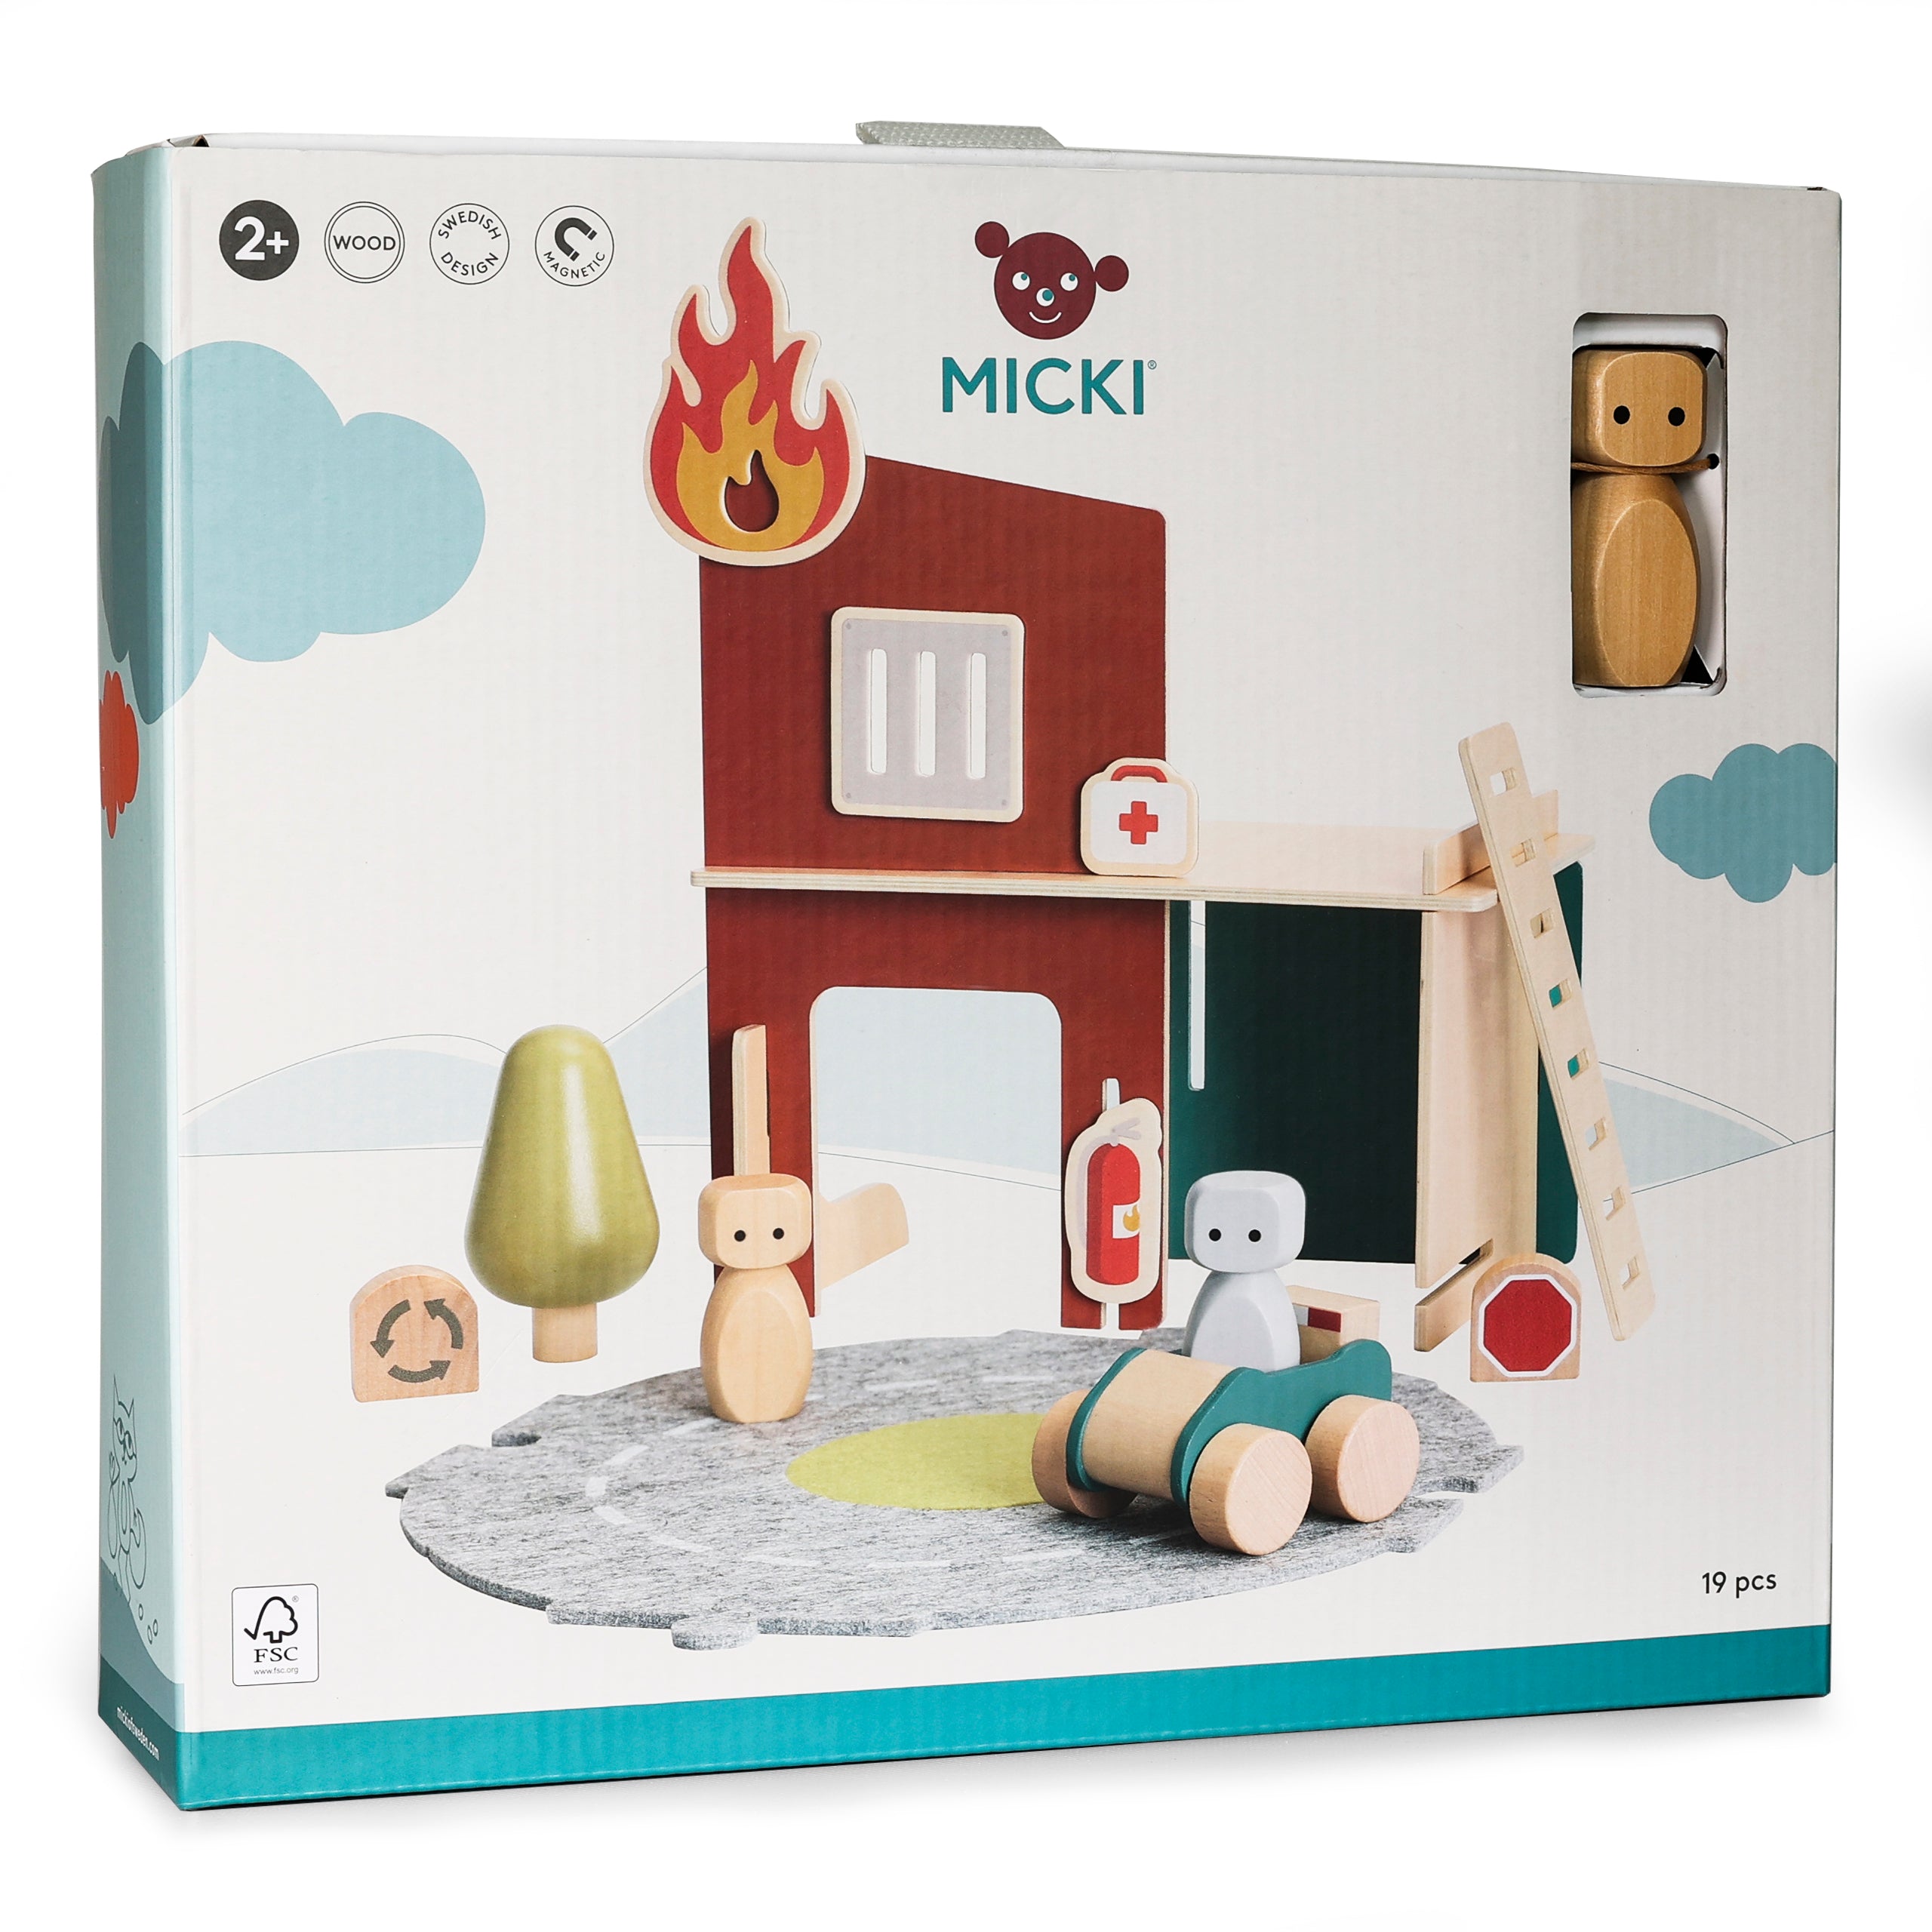 Micki | Play World - Emergency Services